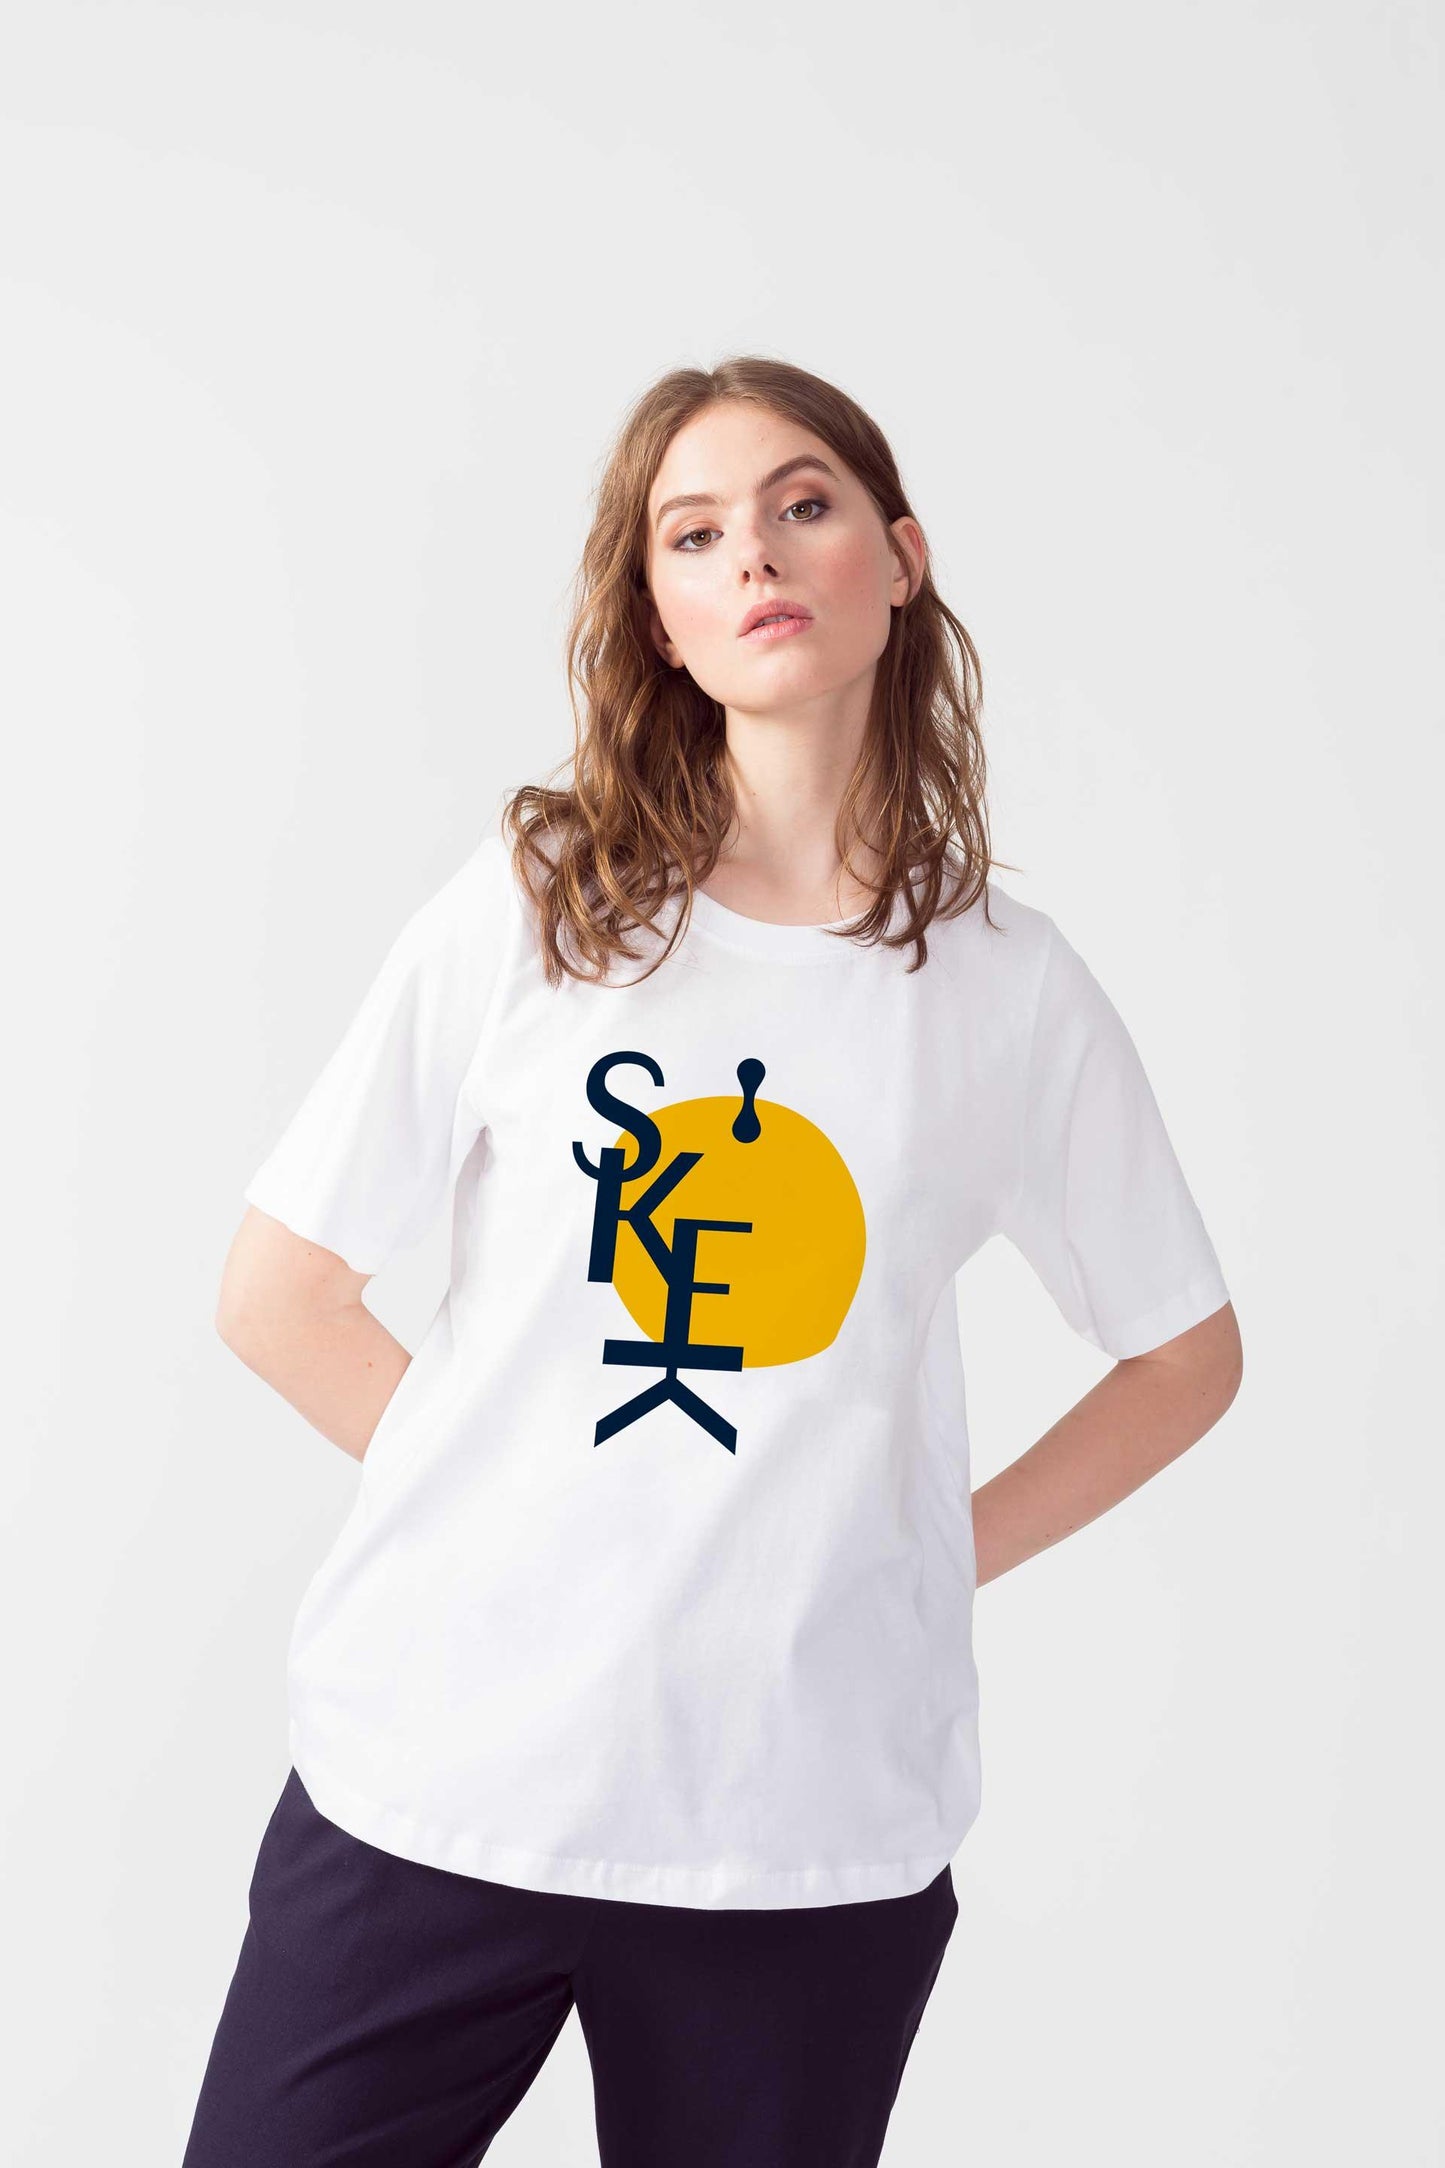 Camiseta "Rising Sun"" by SKFK